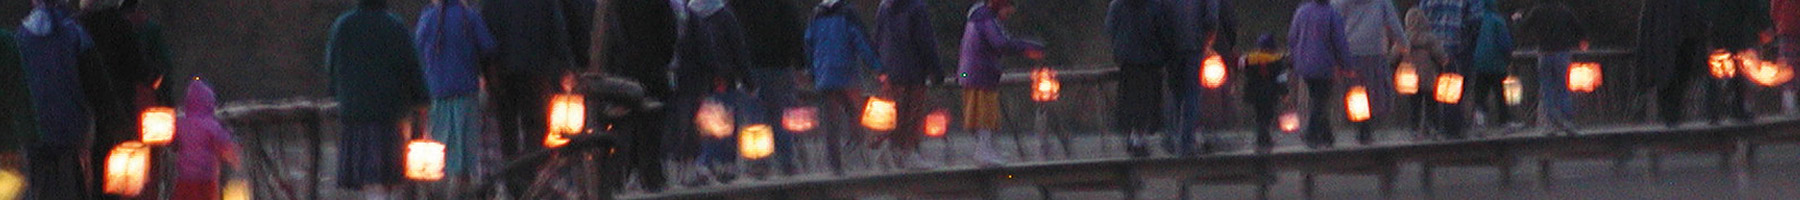 a community lantern walk near a lake